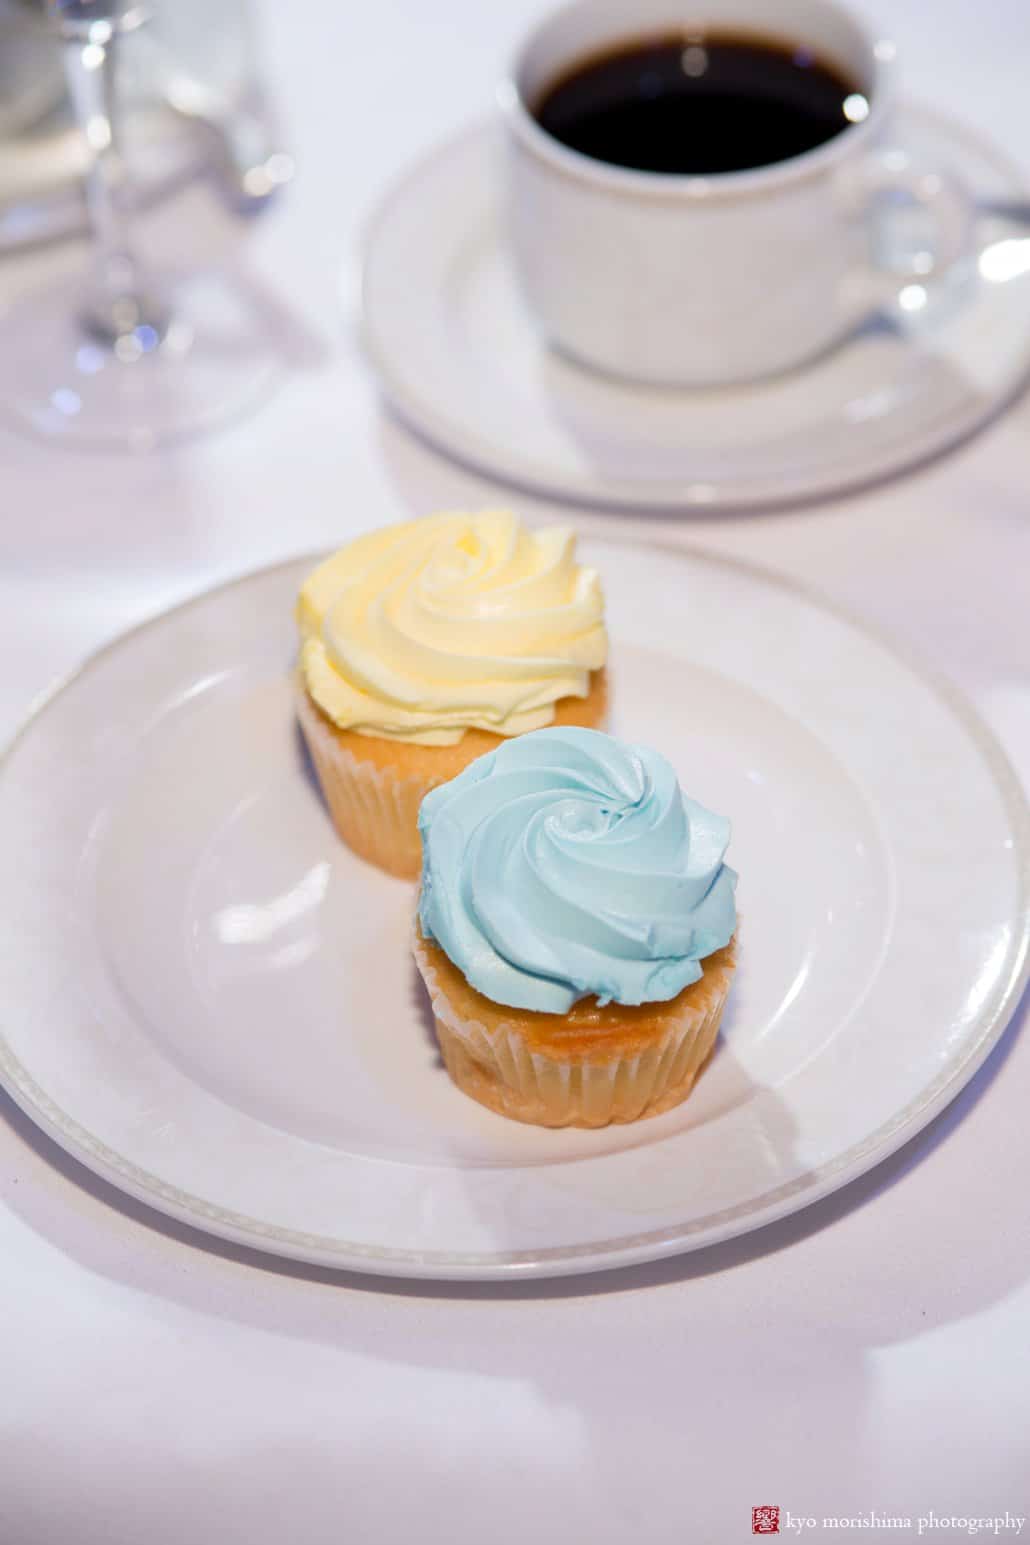 Lemon and blueberry wedding cupcakes at Perona Farms wedding photographed by Kyo Morishima